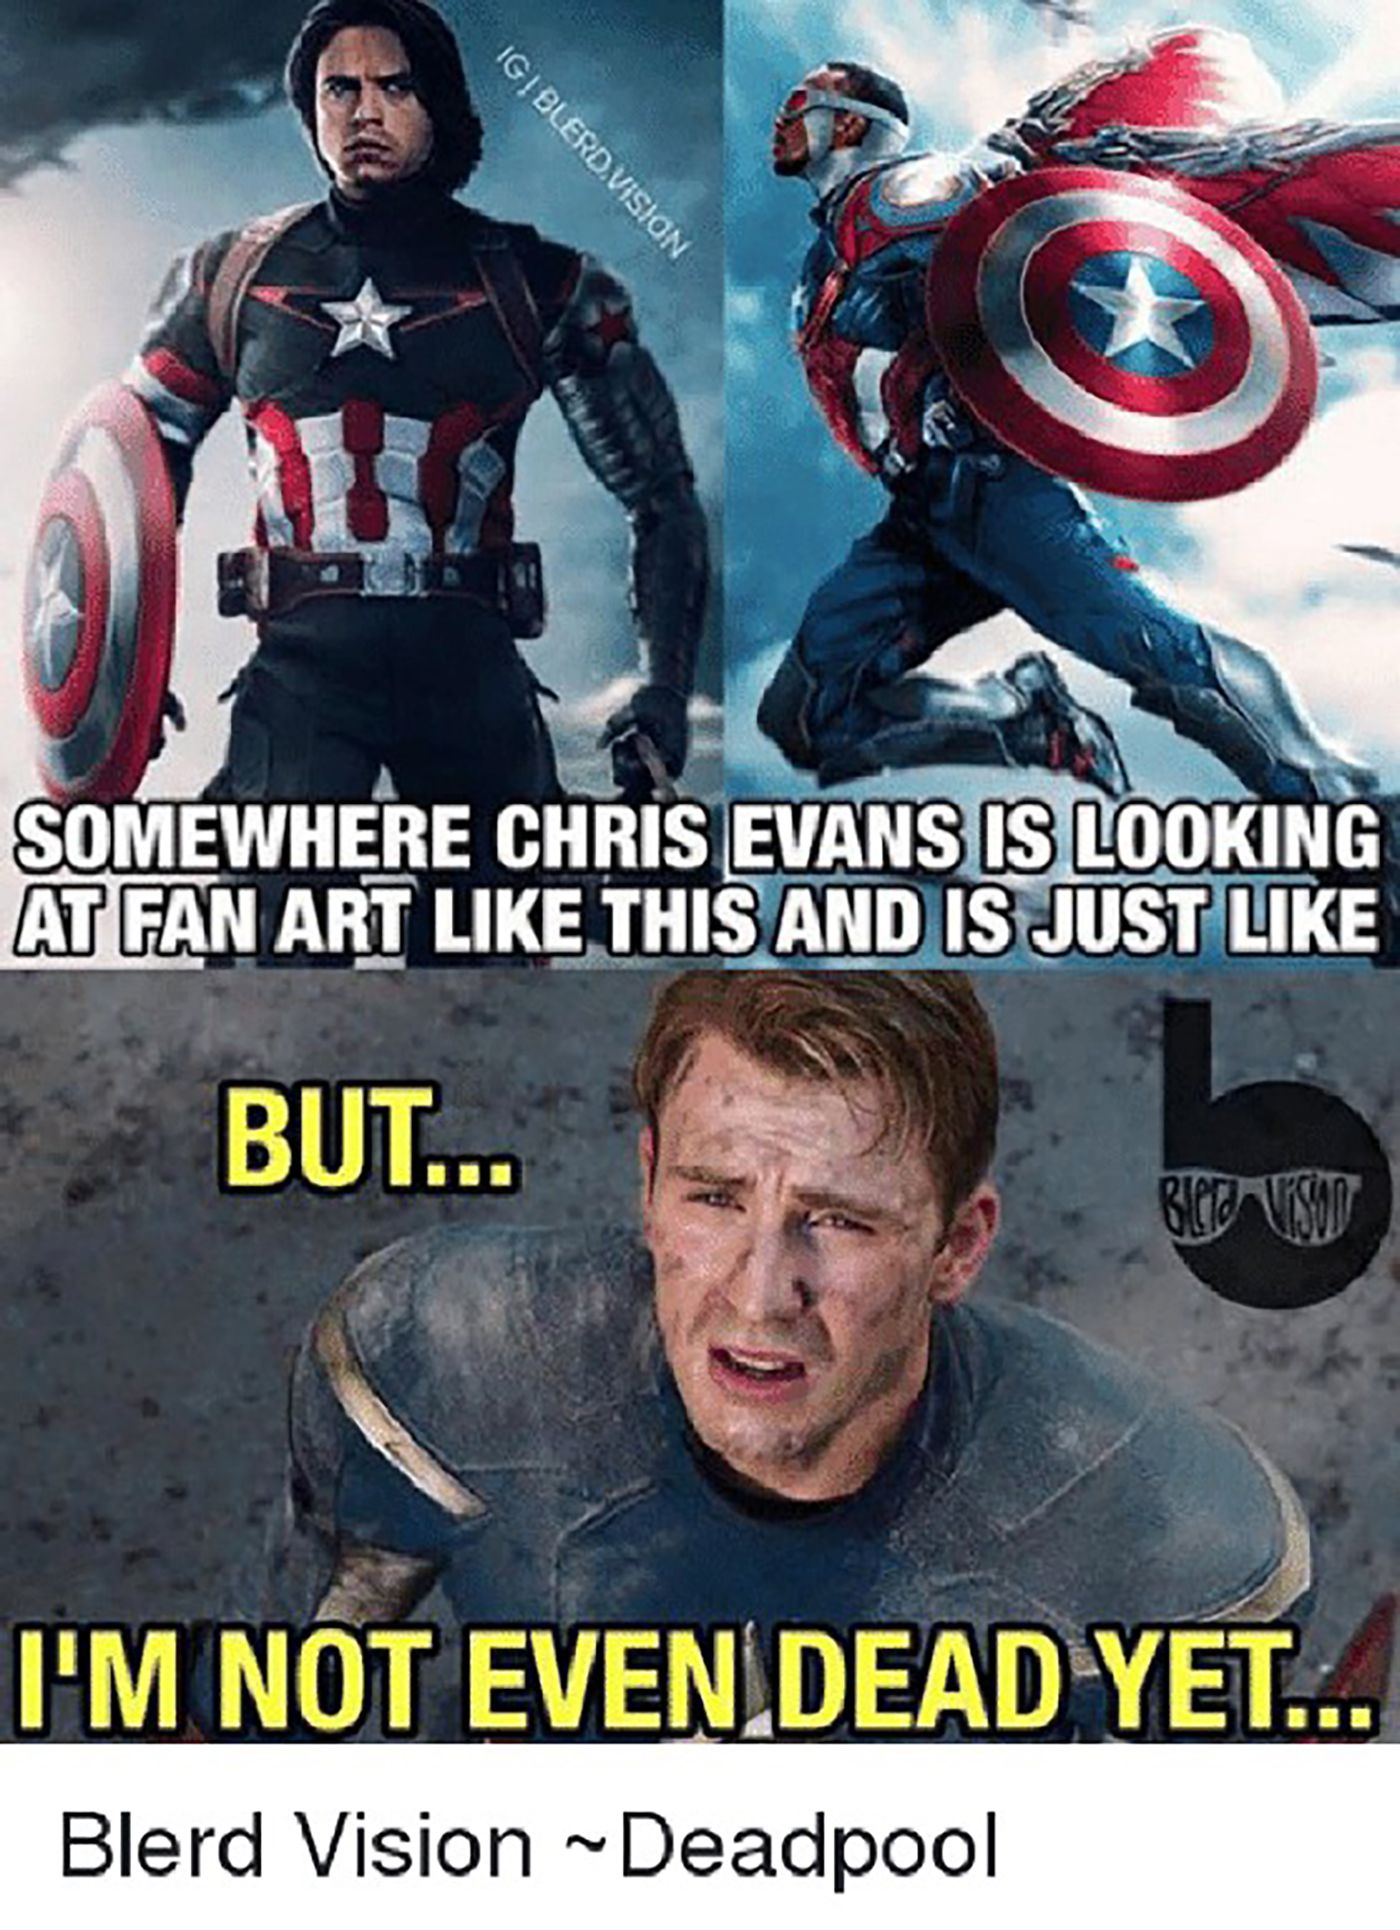 Chris Evans Not Dead Yet